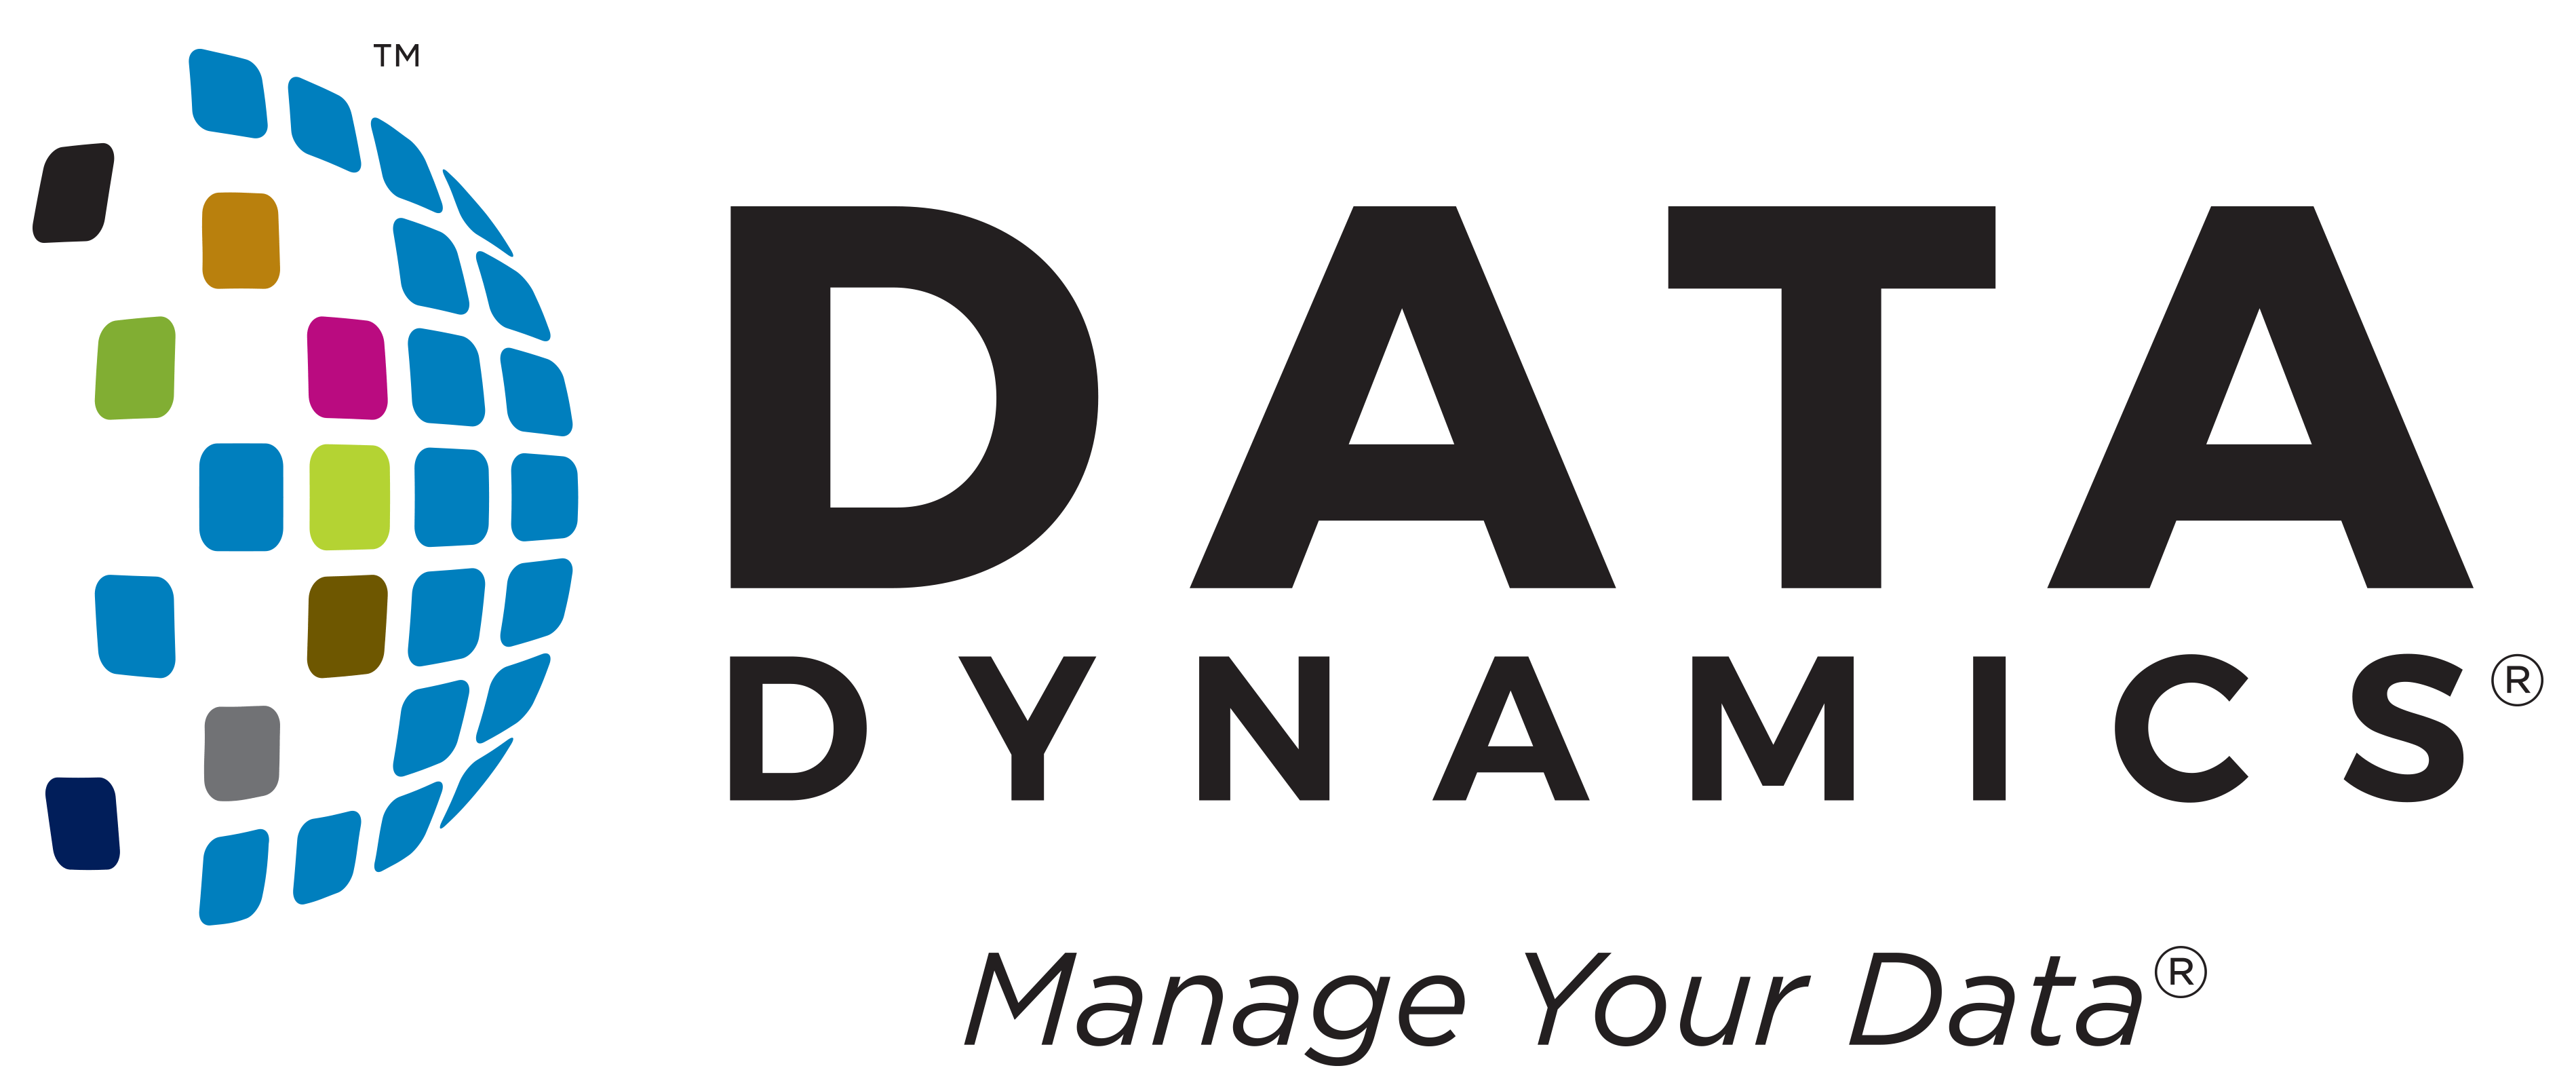 Dynamics Logo - Data Dynamics File-Based Storage Management & Migration